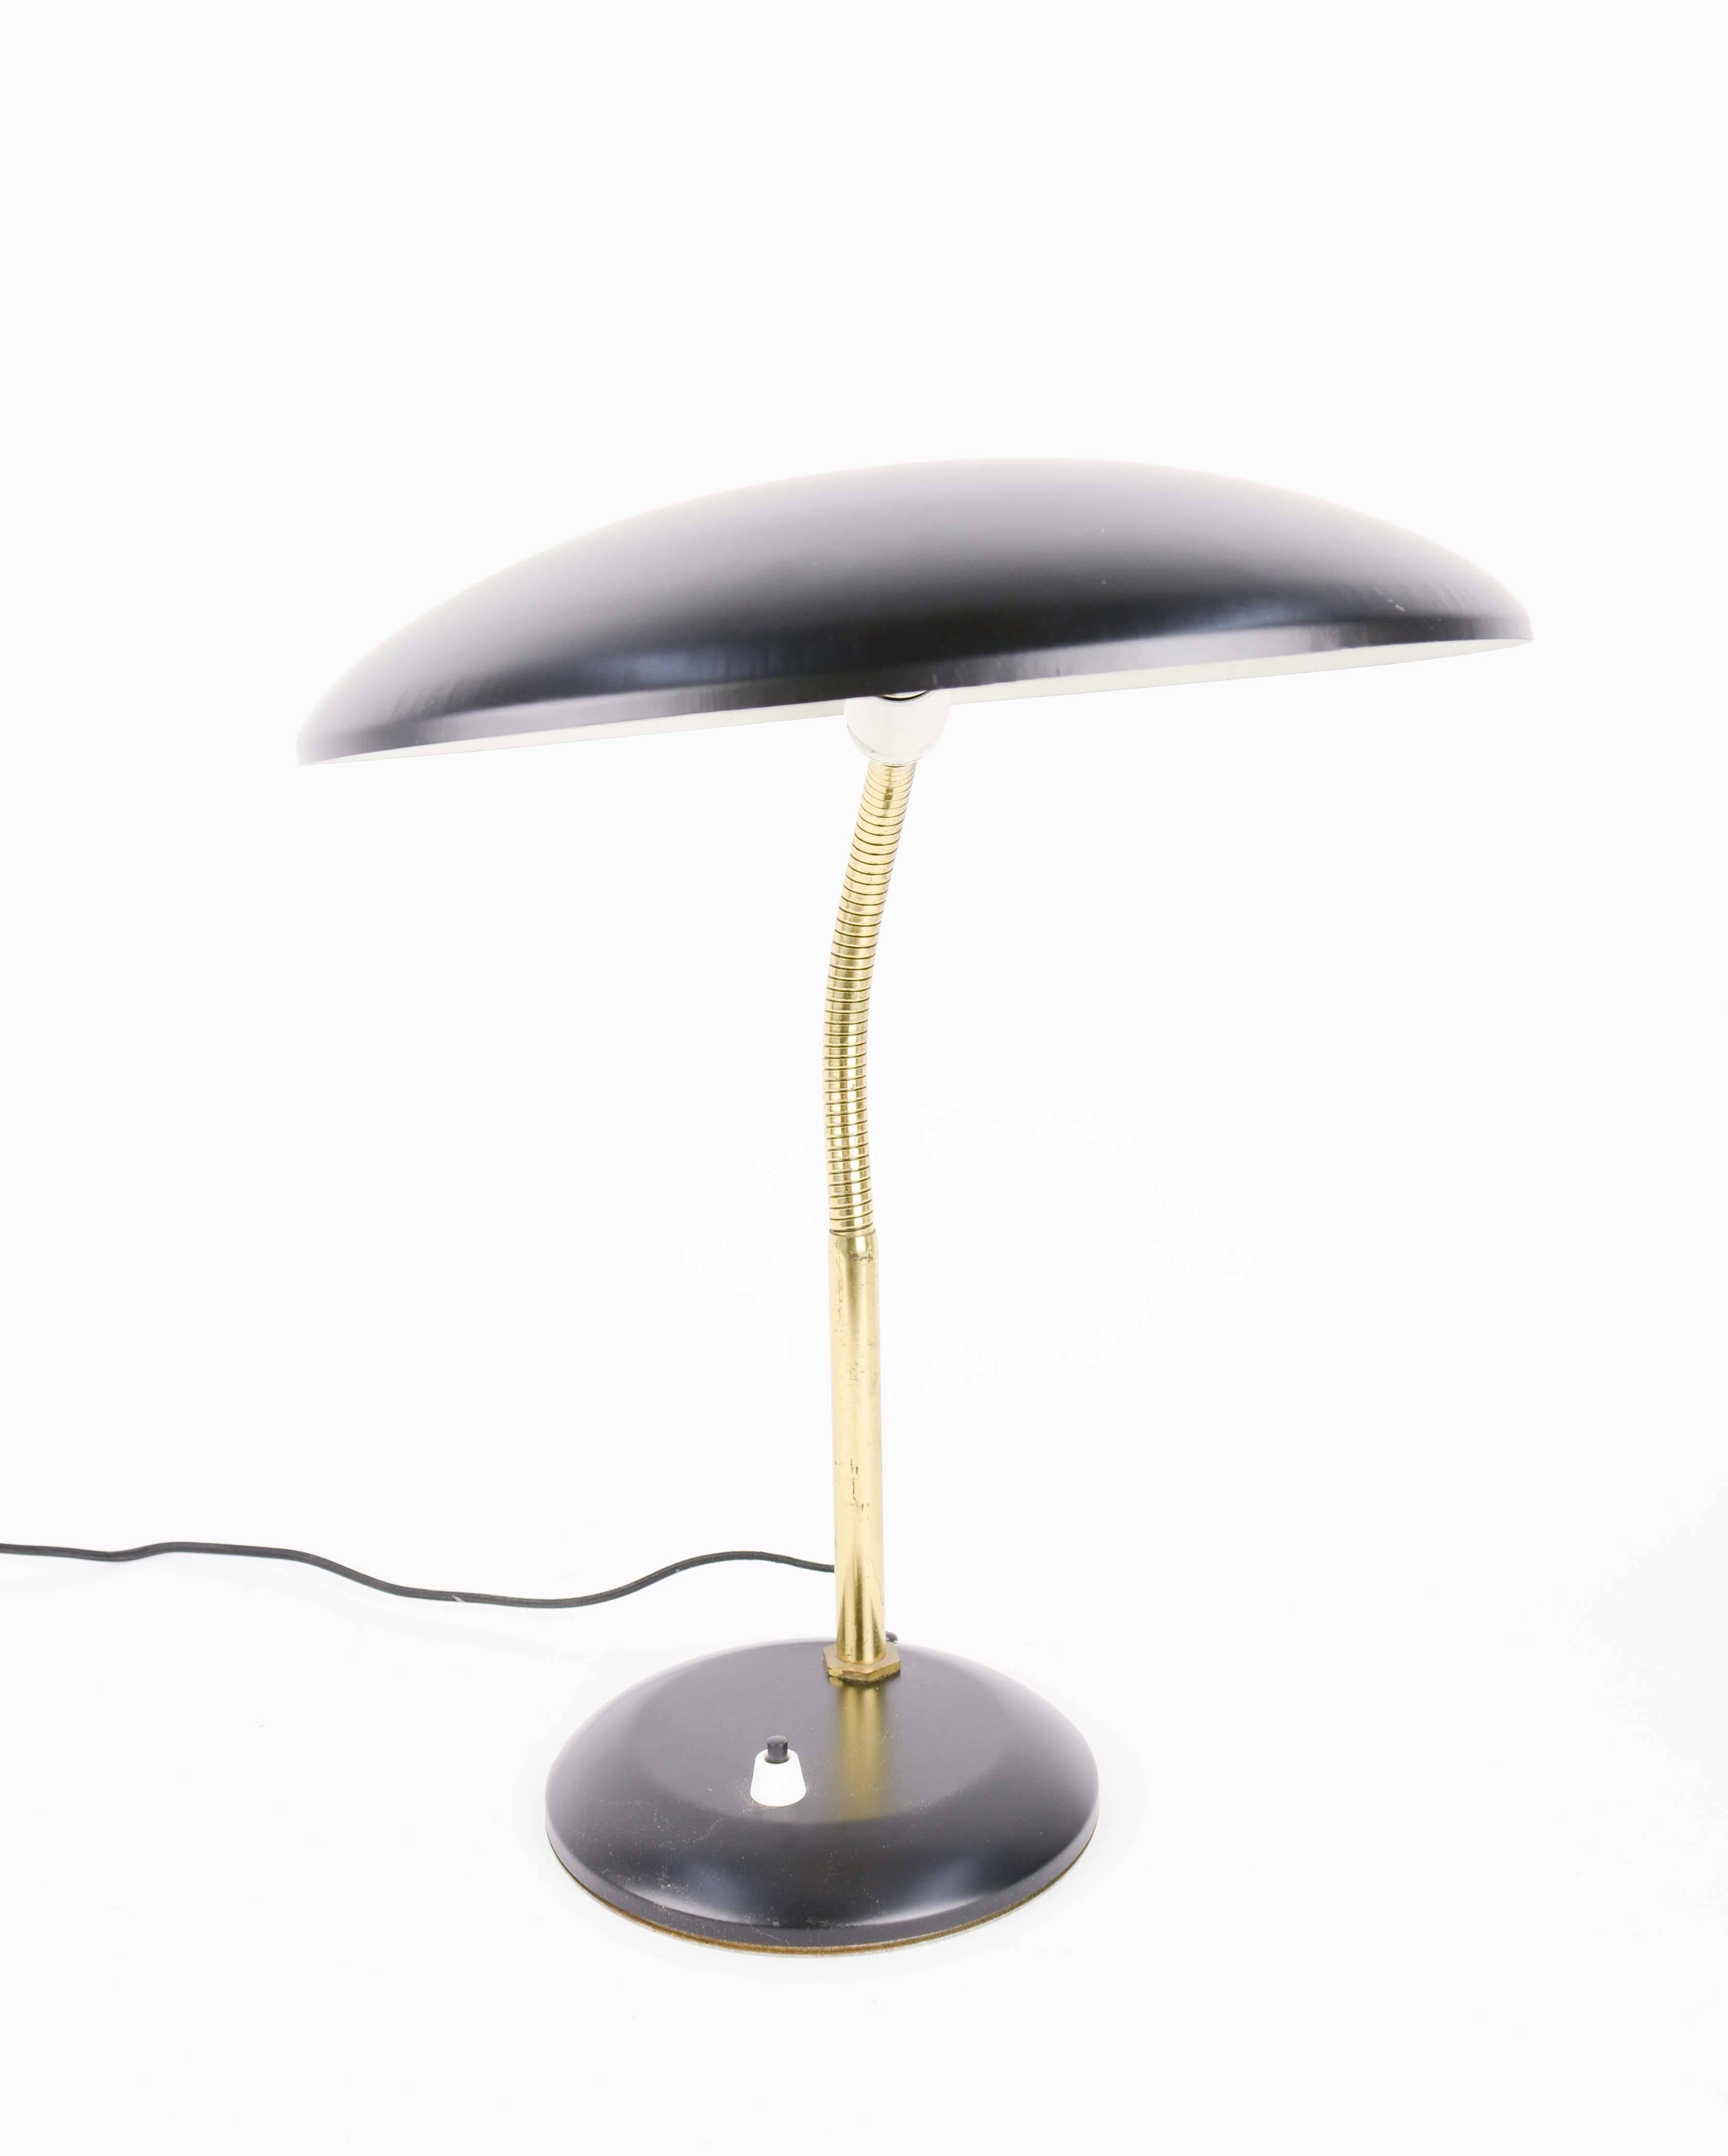 French Flying Saucer Gooseneck Desk Lamp in Brass and Black 1